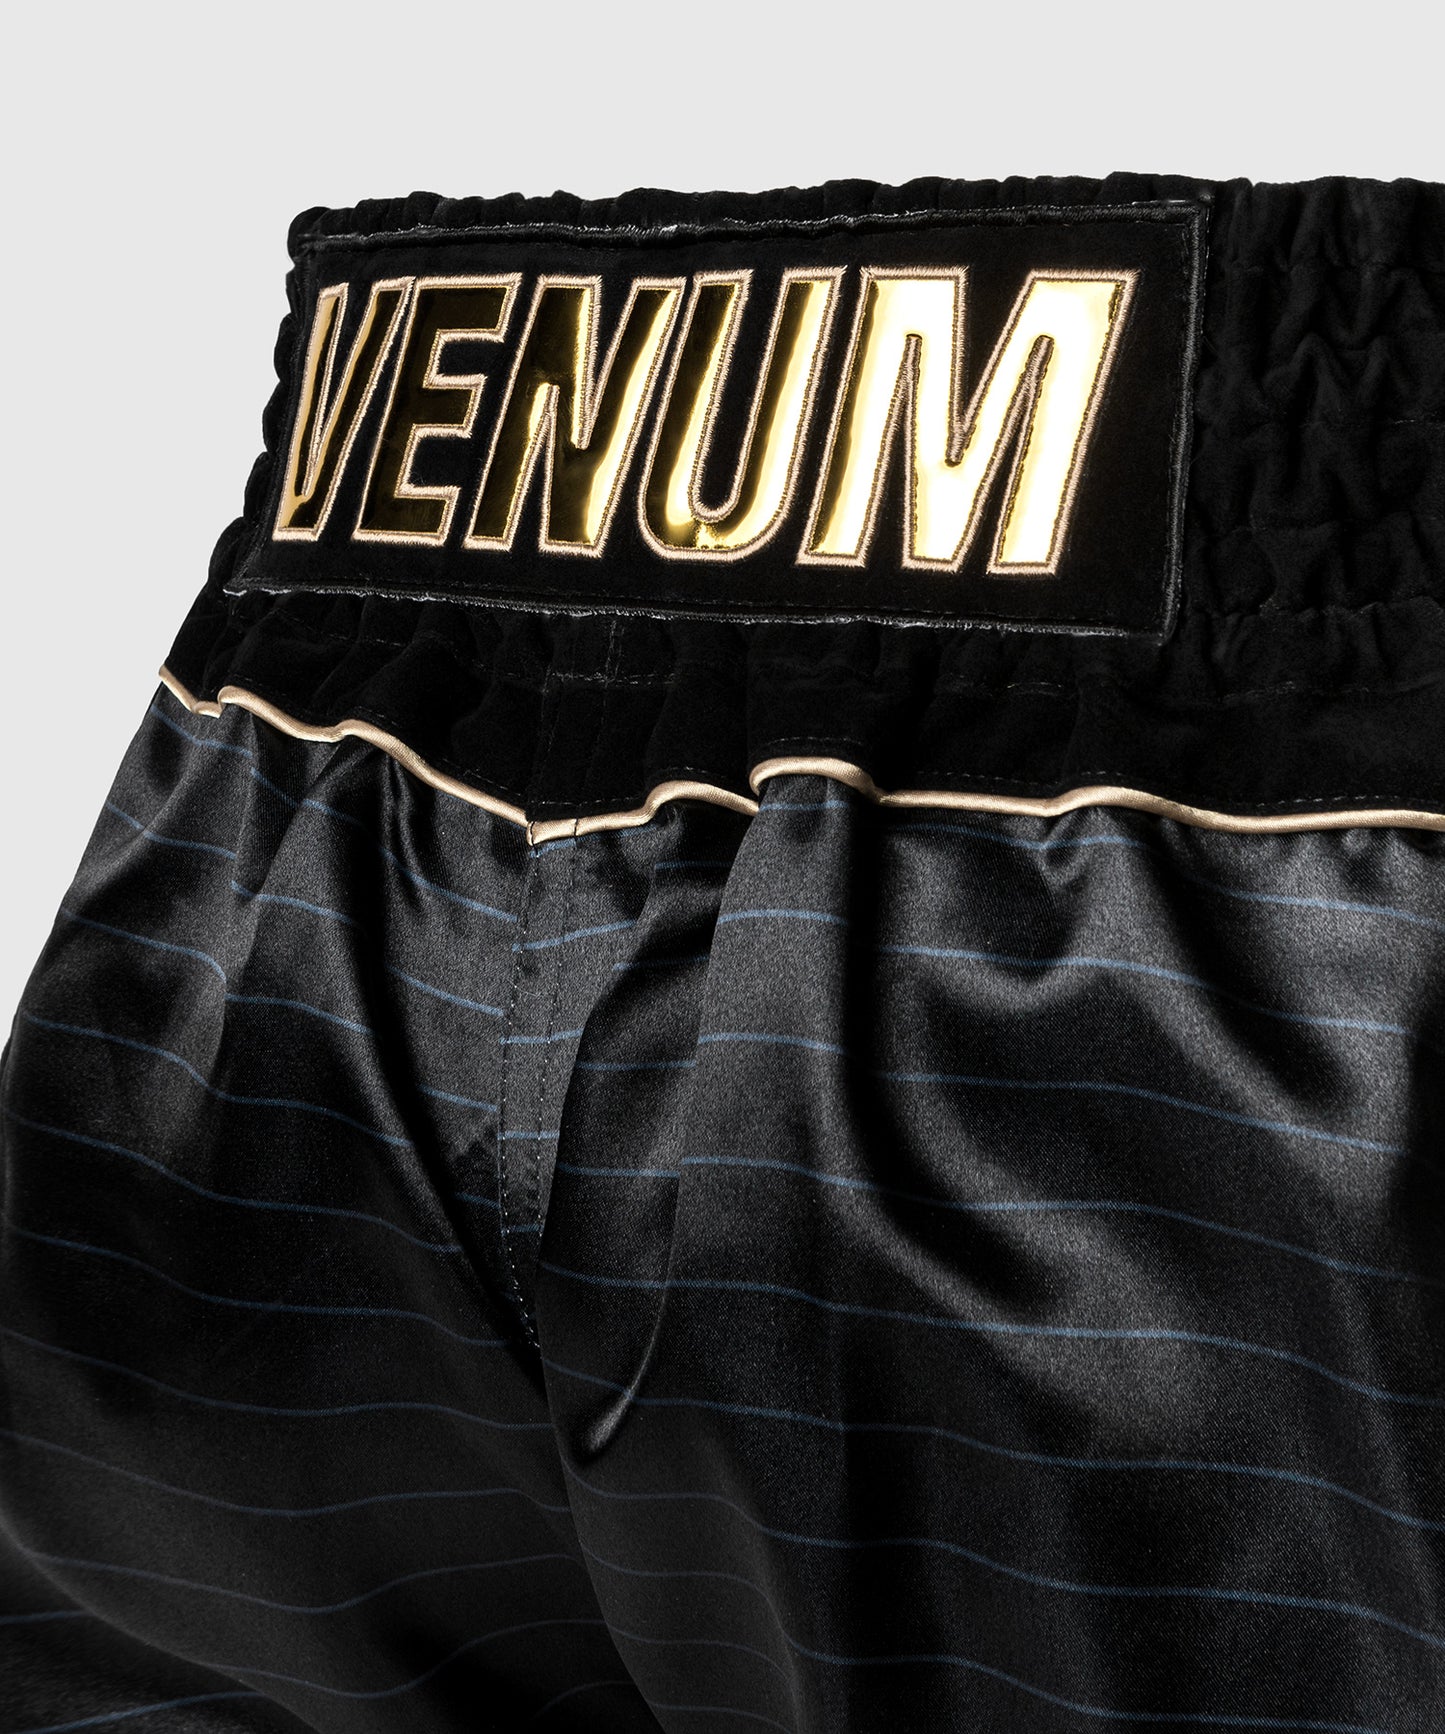 Venum Attack Muay Thai Shorts - Schwarz/Grau